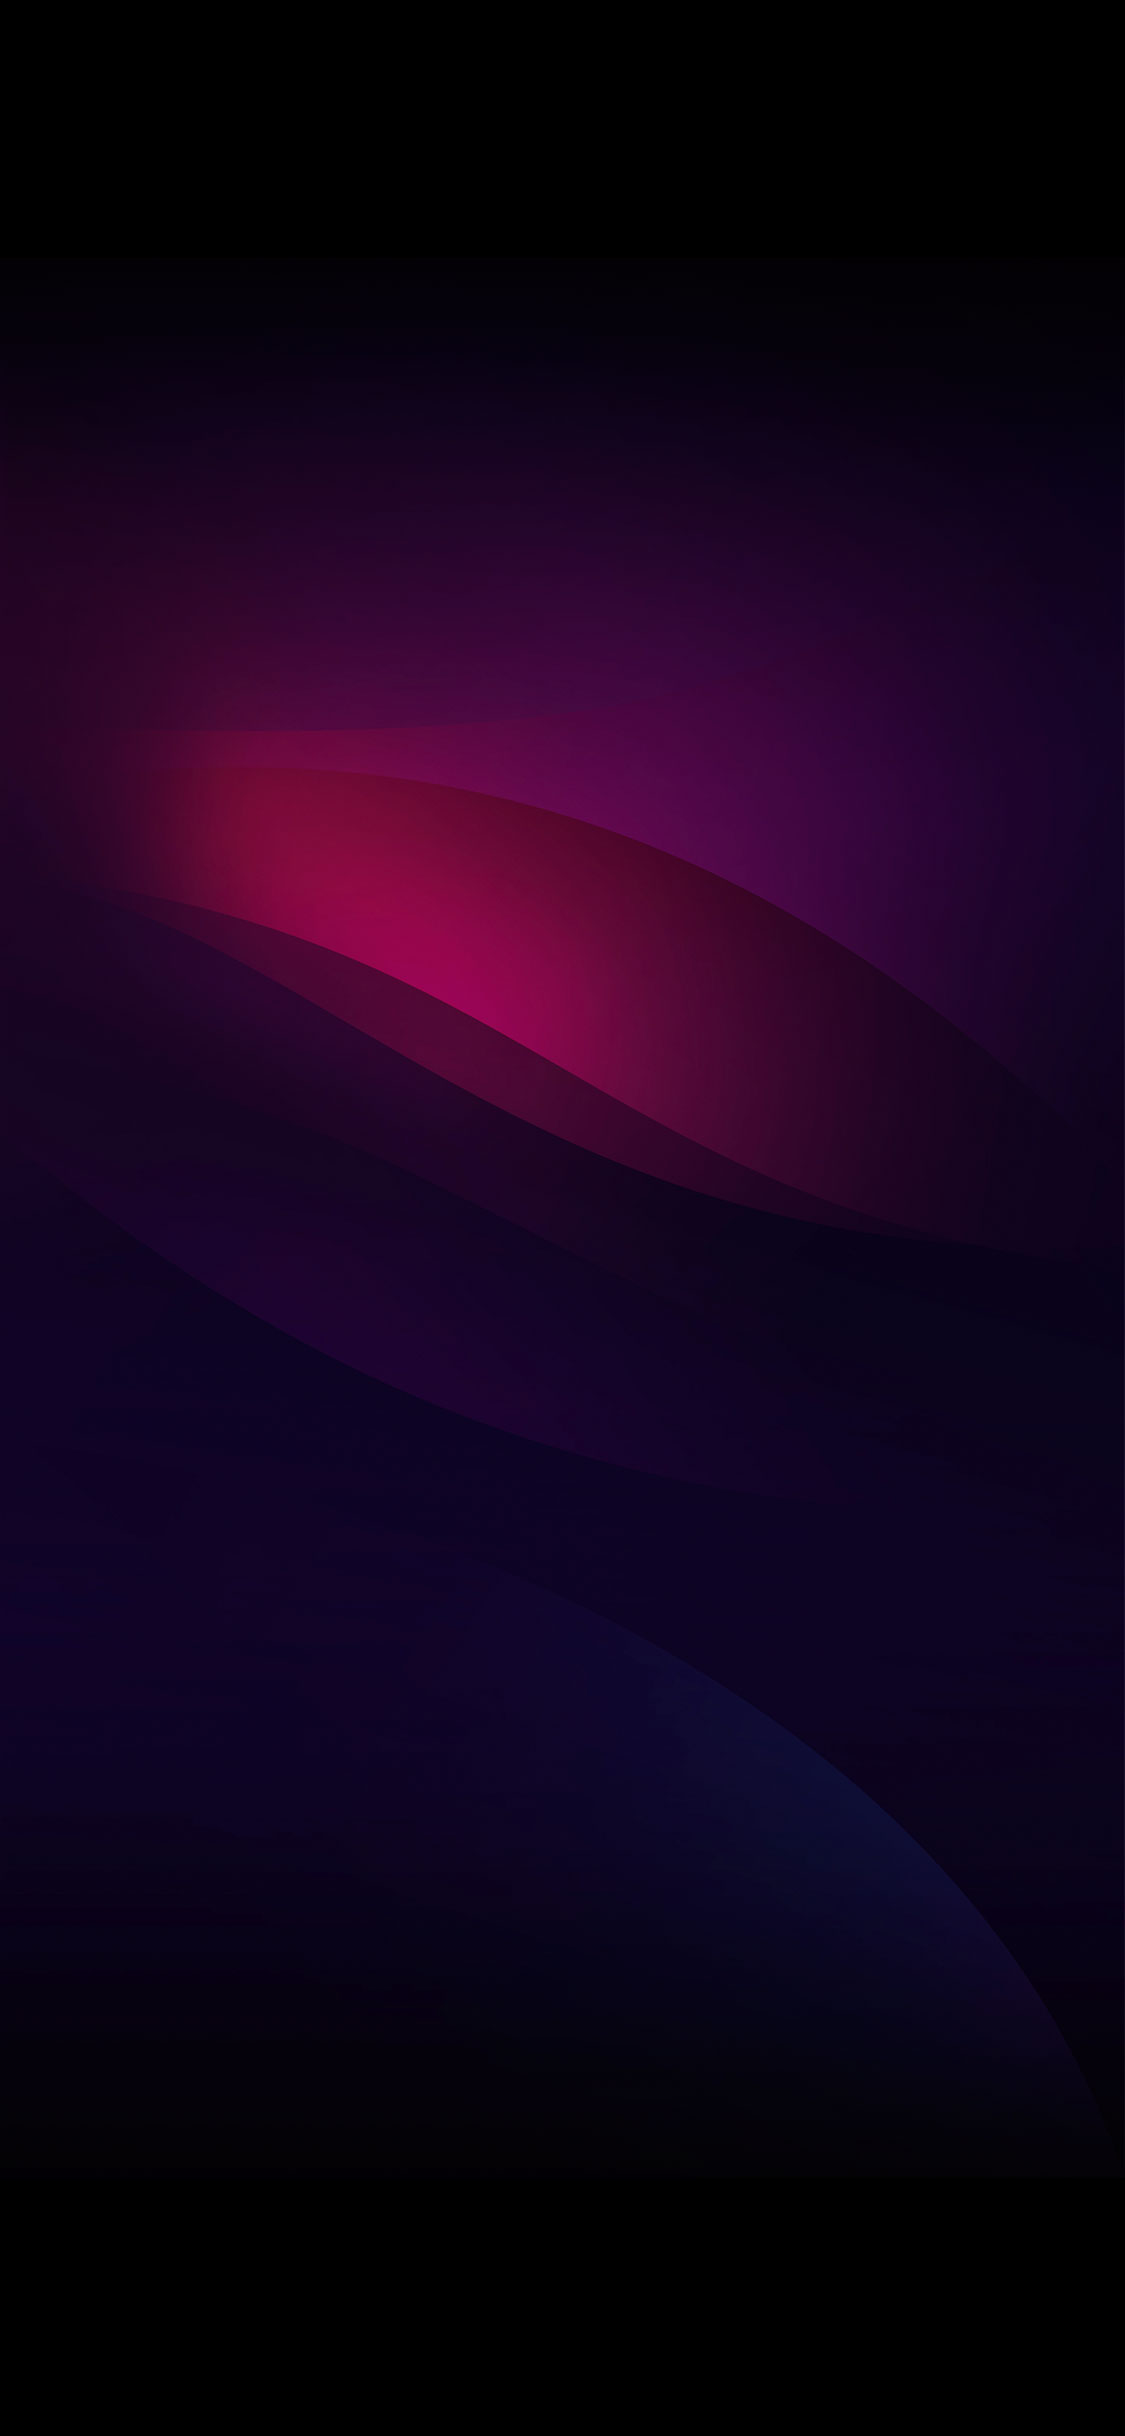 iphone 10 wallpaper,violet,blue,black,purple,pink